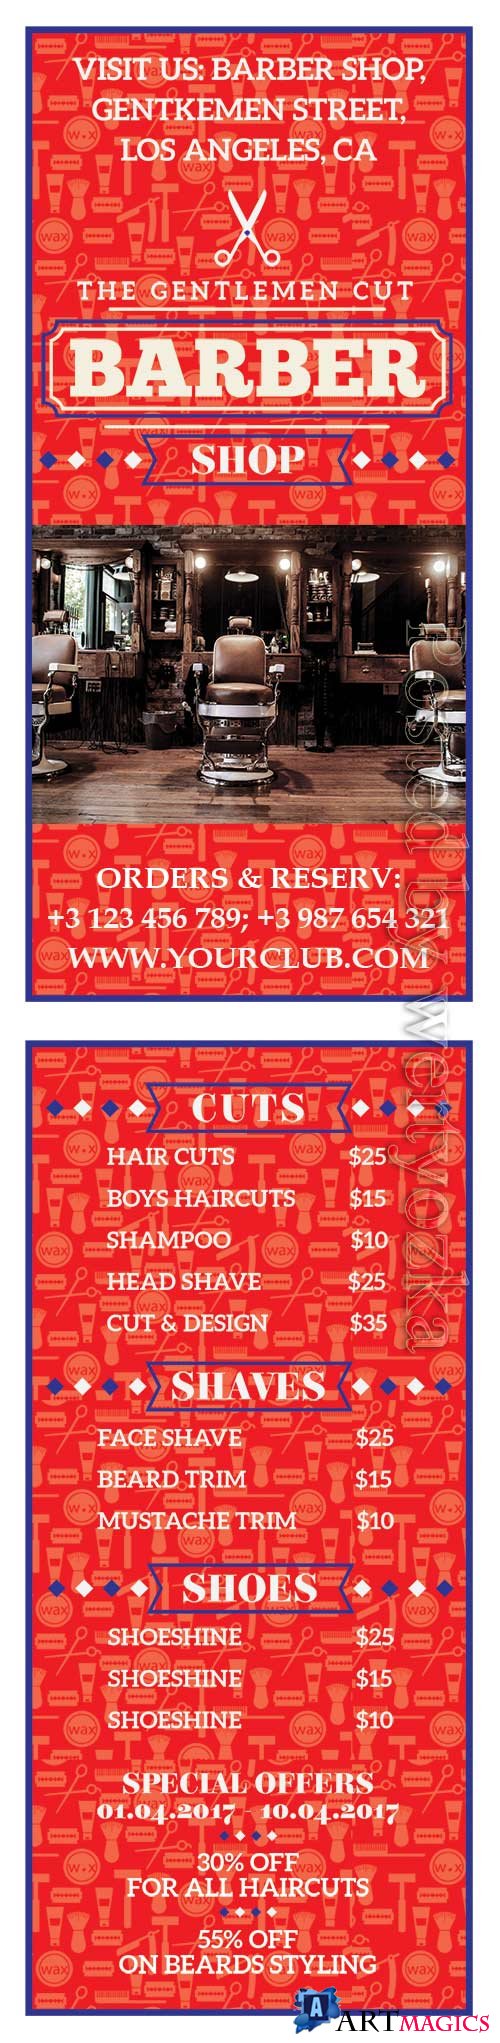 Barber shop psd flyer template